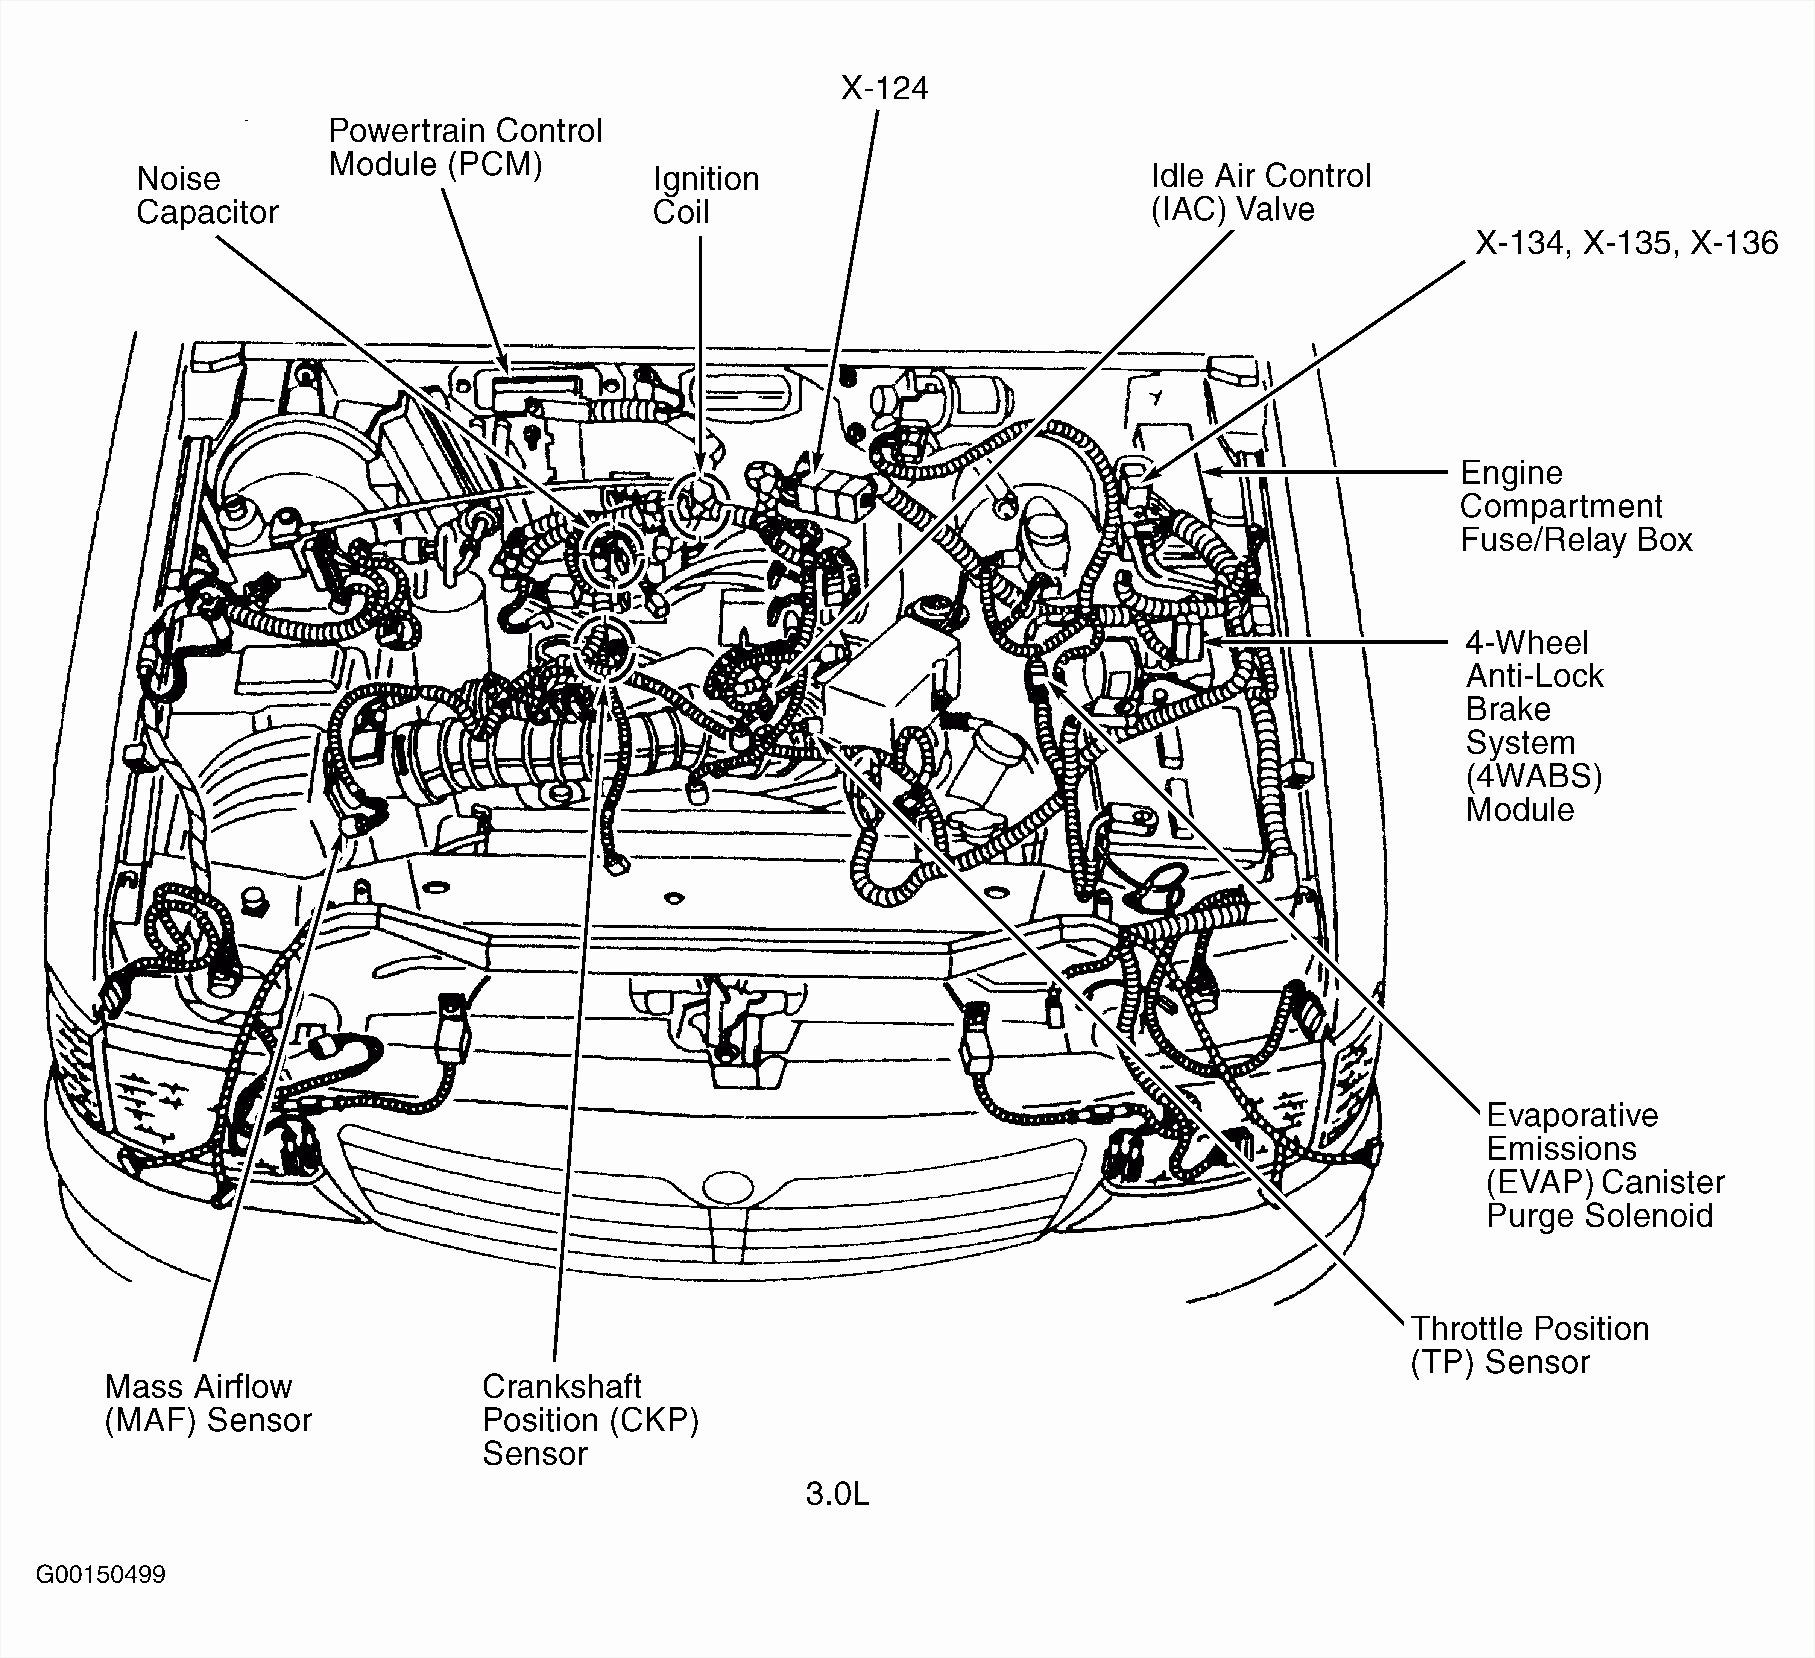 Toyota 3 0 V6 Engine Diagram ford V6 3 7 Engine Diagram Wiring Diagram Imp Of Toyota 3 0 V6 Engine Diagram